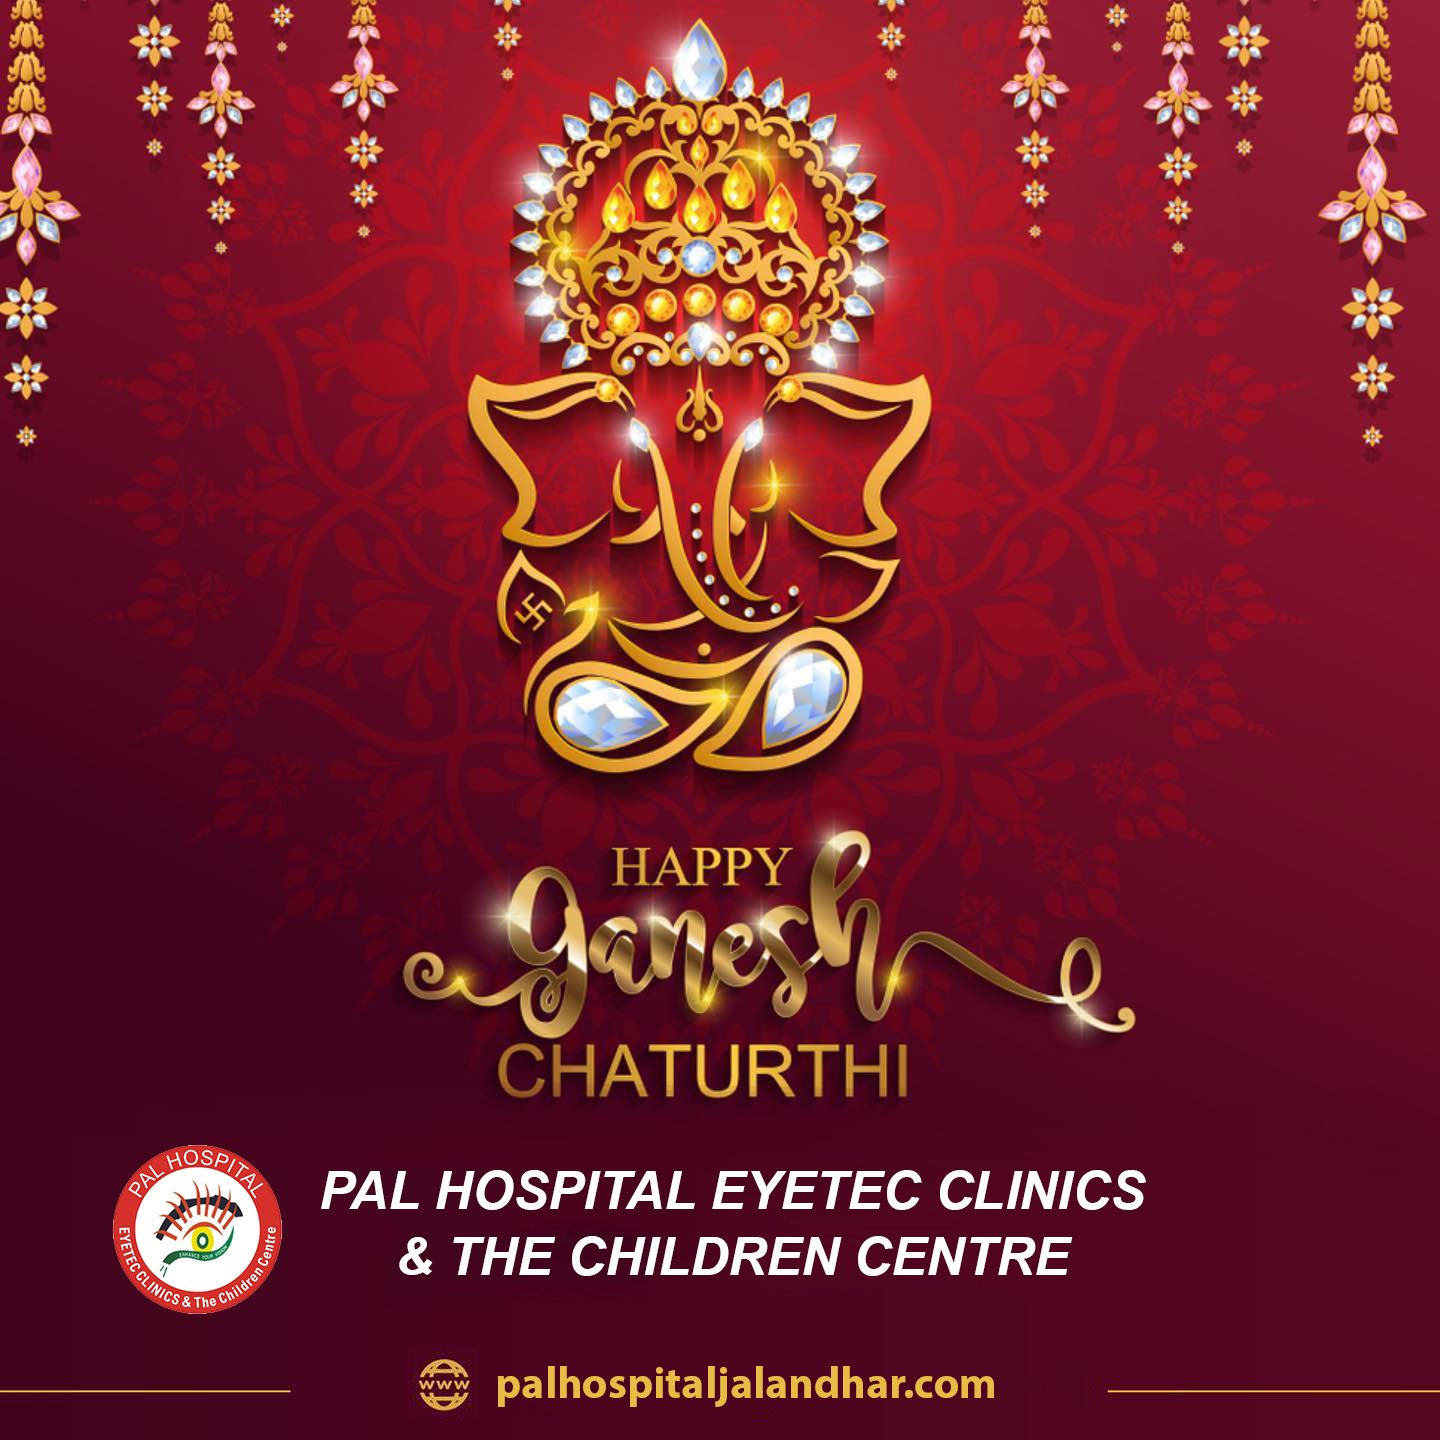 Pal Hospital Jalandhar Eyetec Clinics & The Children Centre - Ganesh Chaturthi